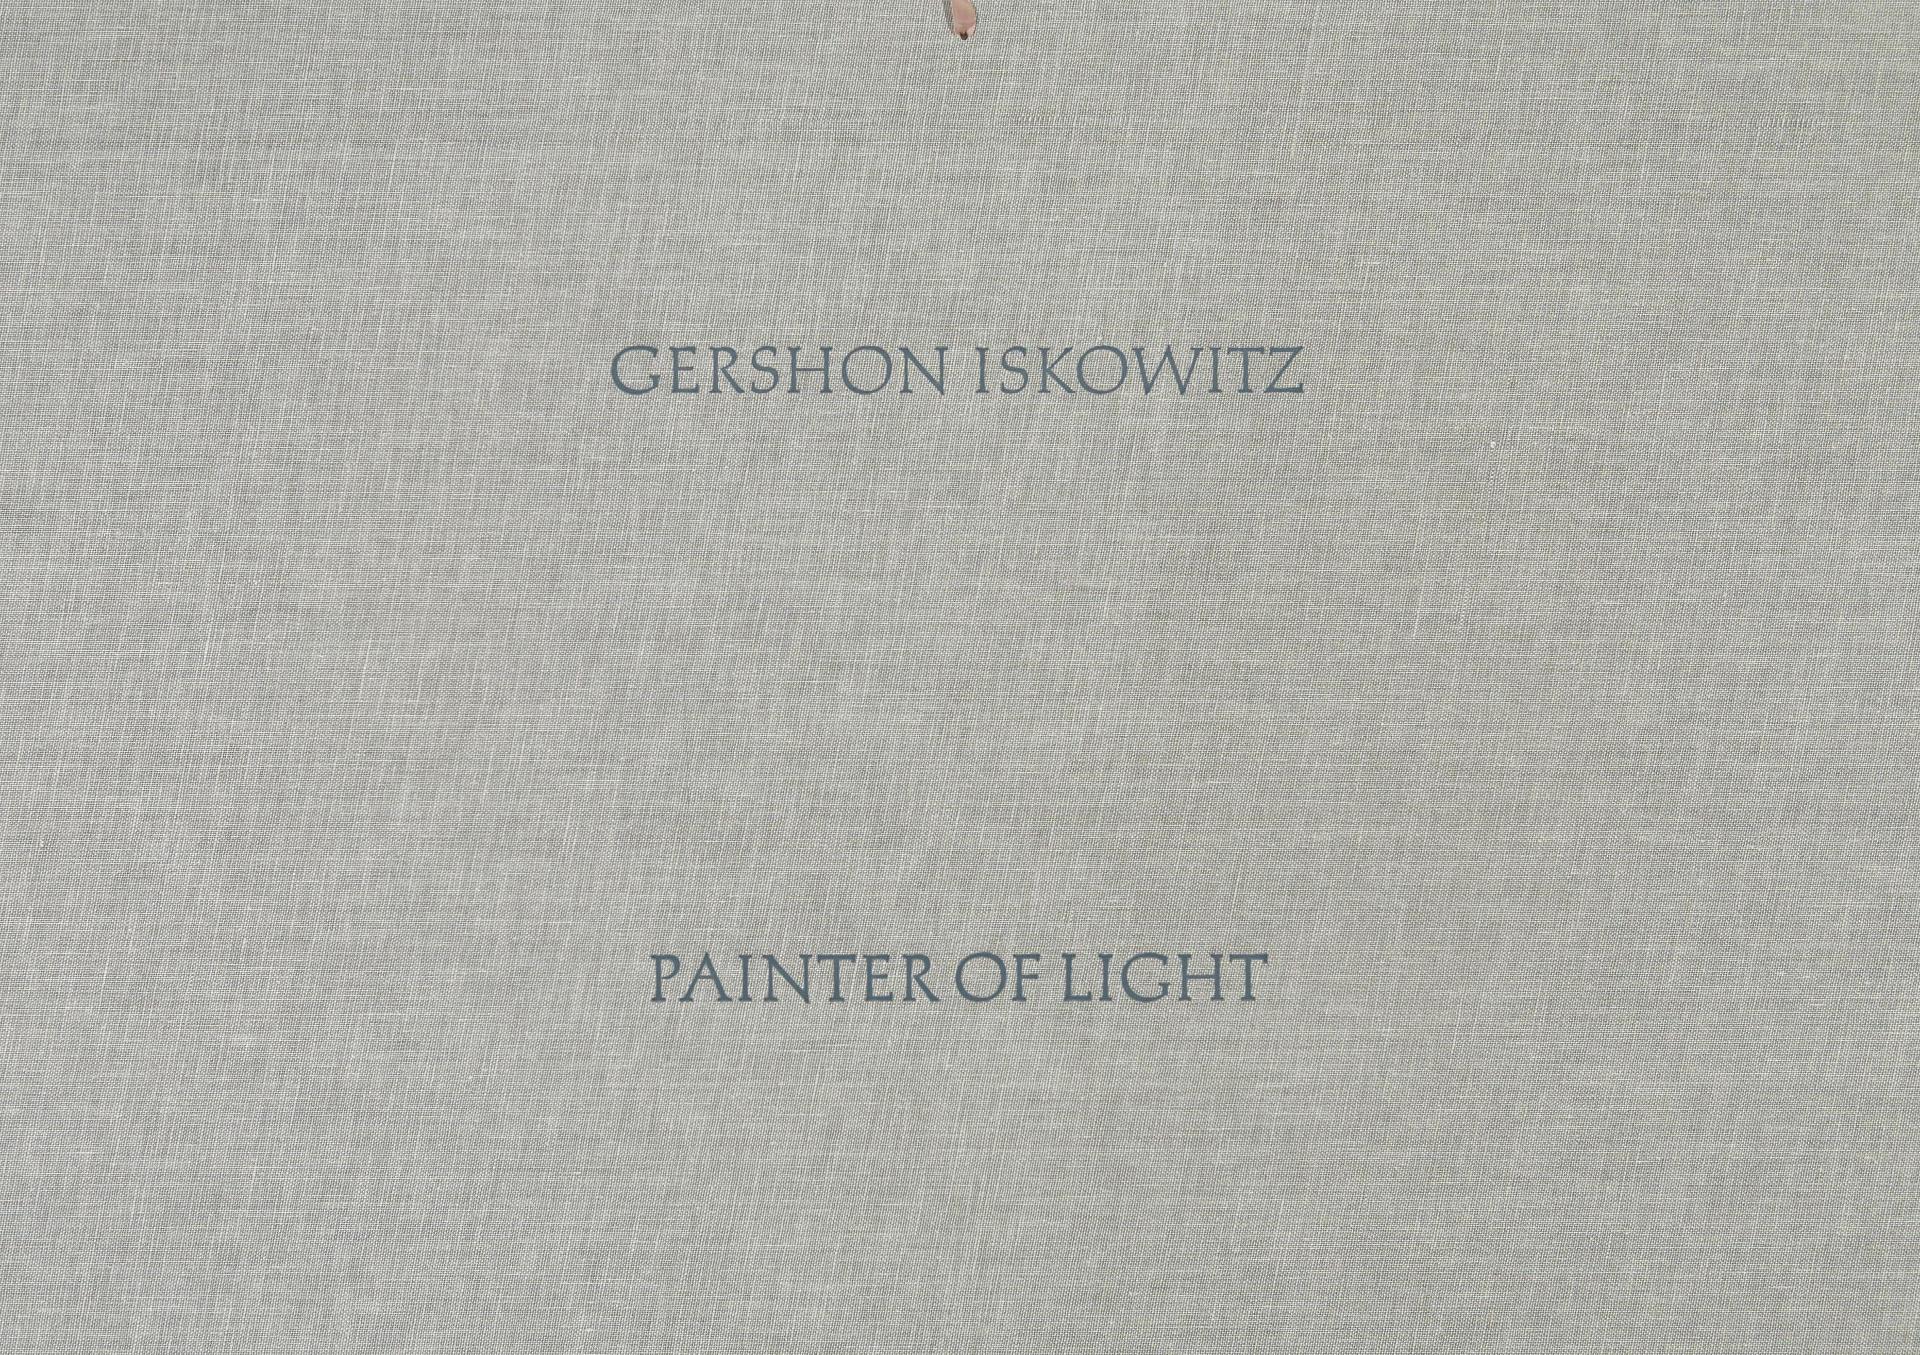 Gershon Iskowitz (1921-1988) - Painter of Light by Adele Freeman